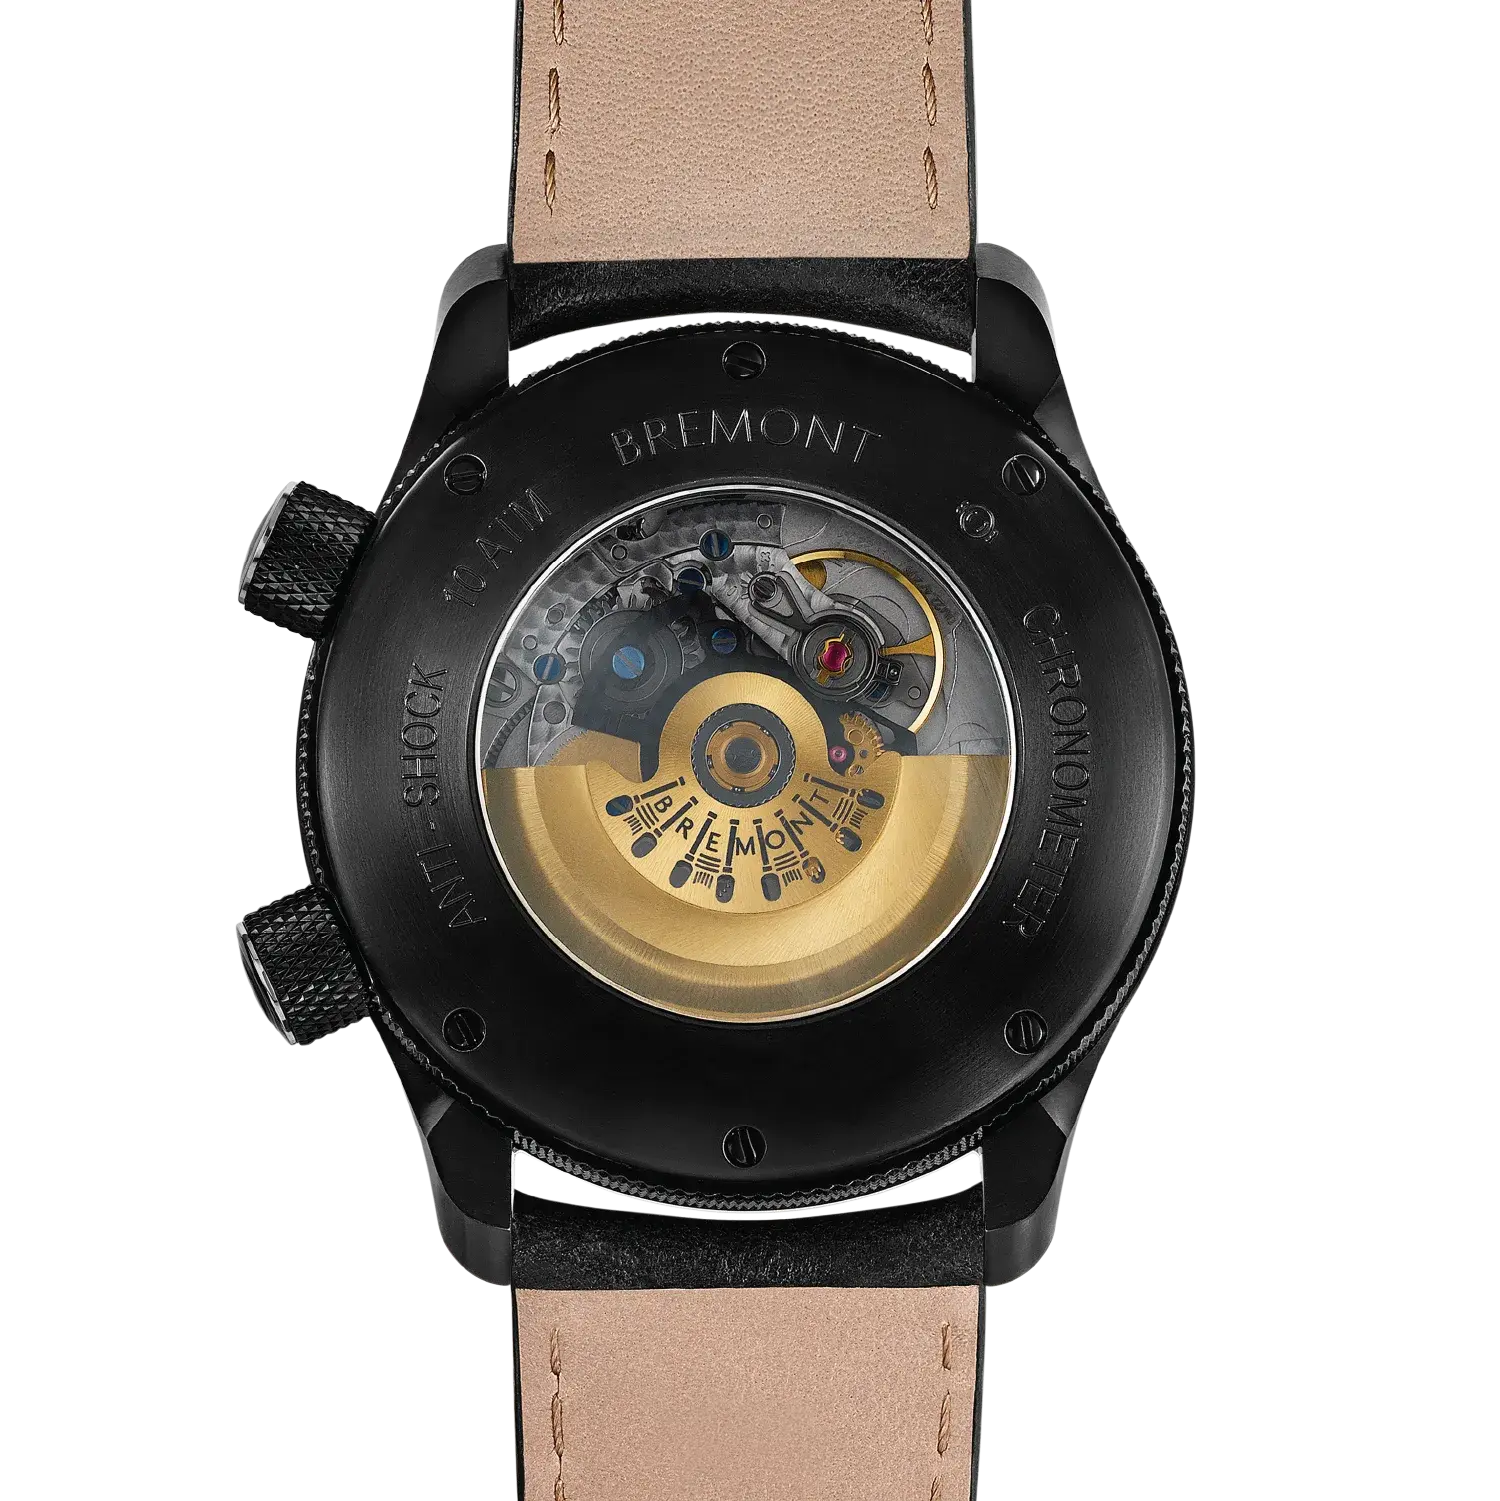 Bremont Chronometers Watches | Mens | U-2 Argylle U2